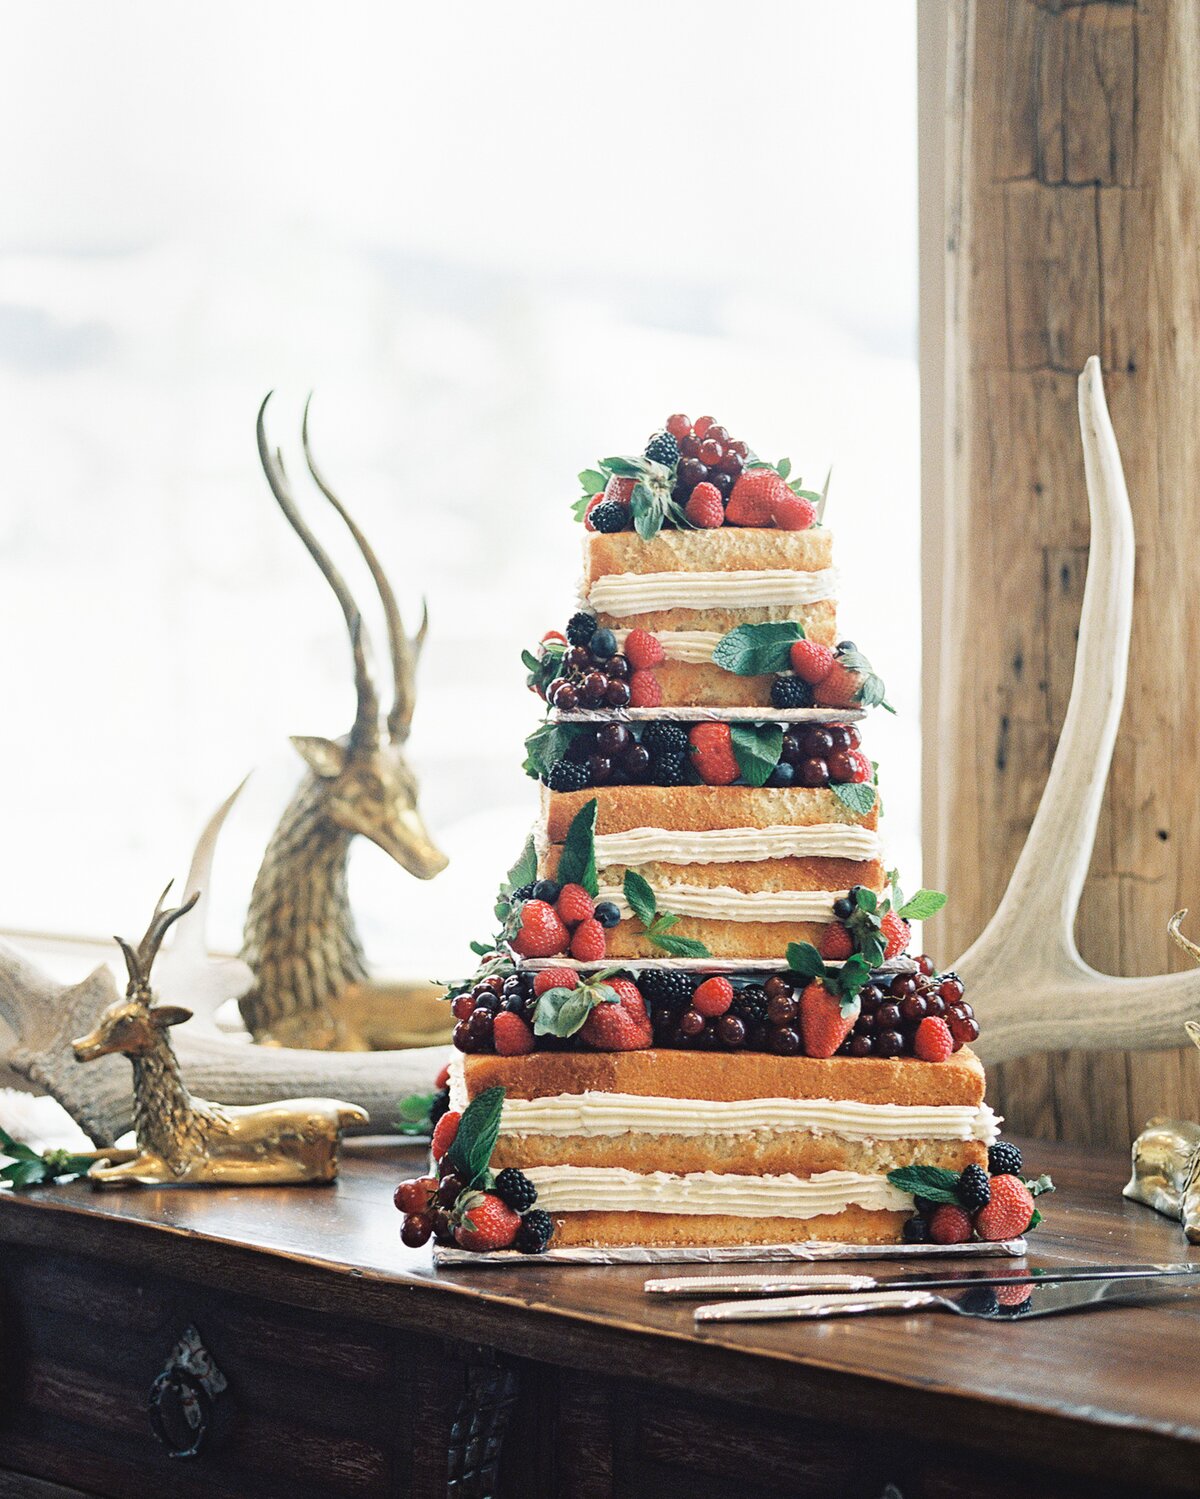 Millefoglie Wedding Cake